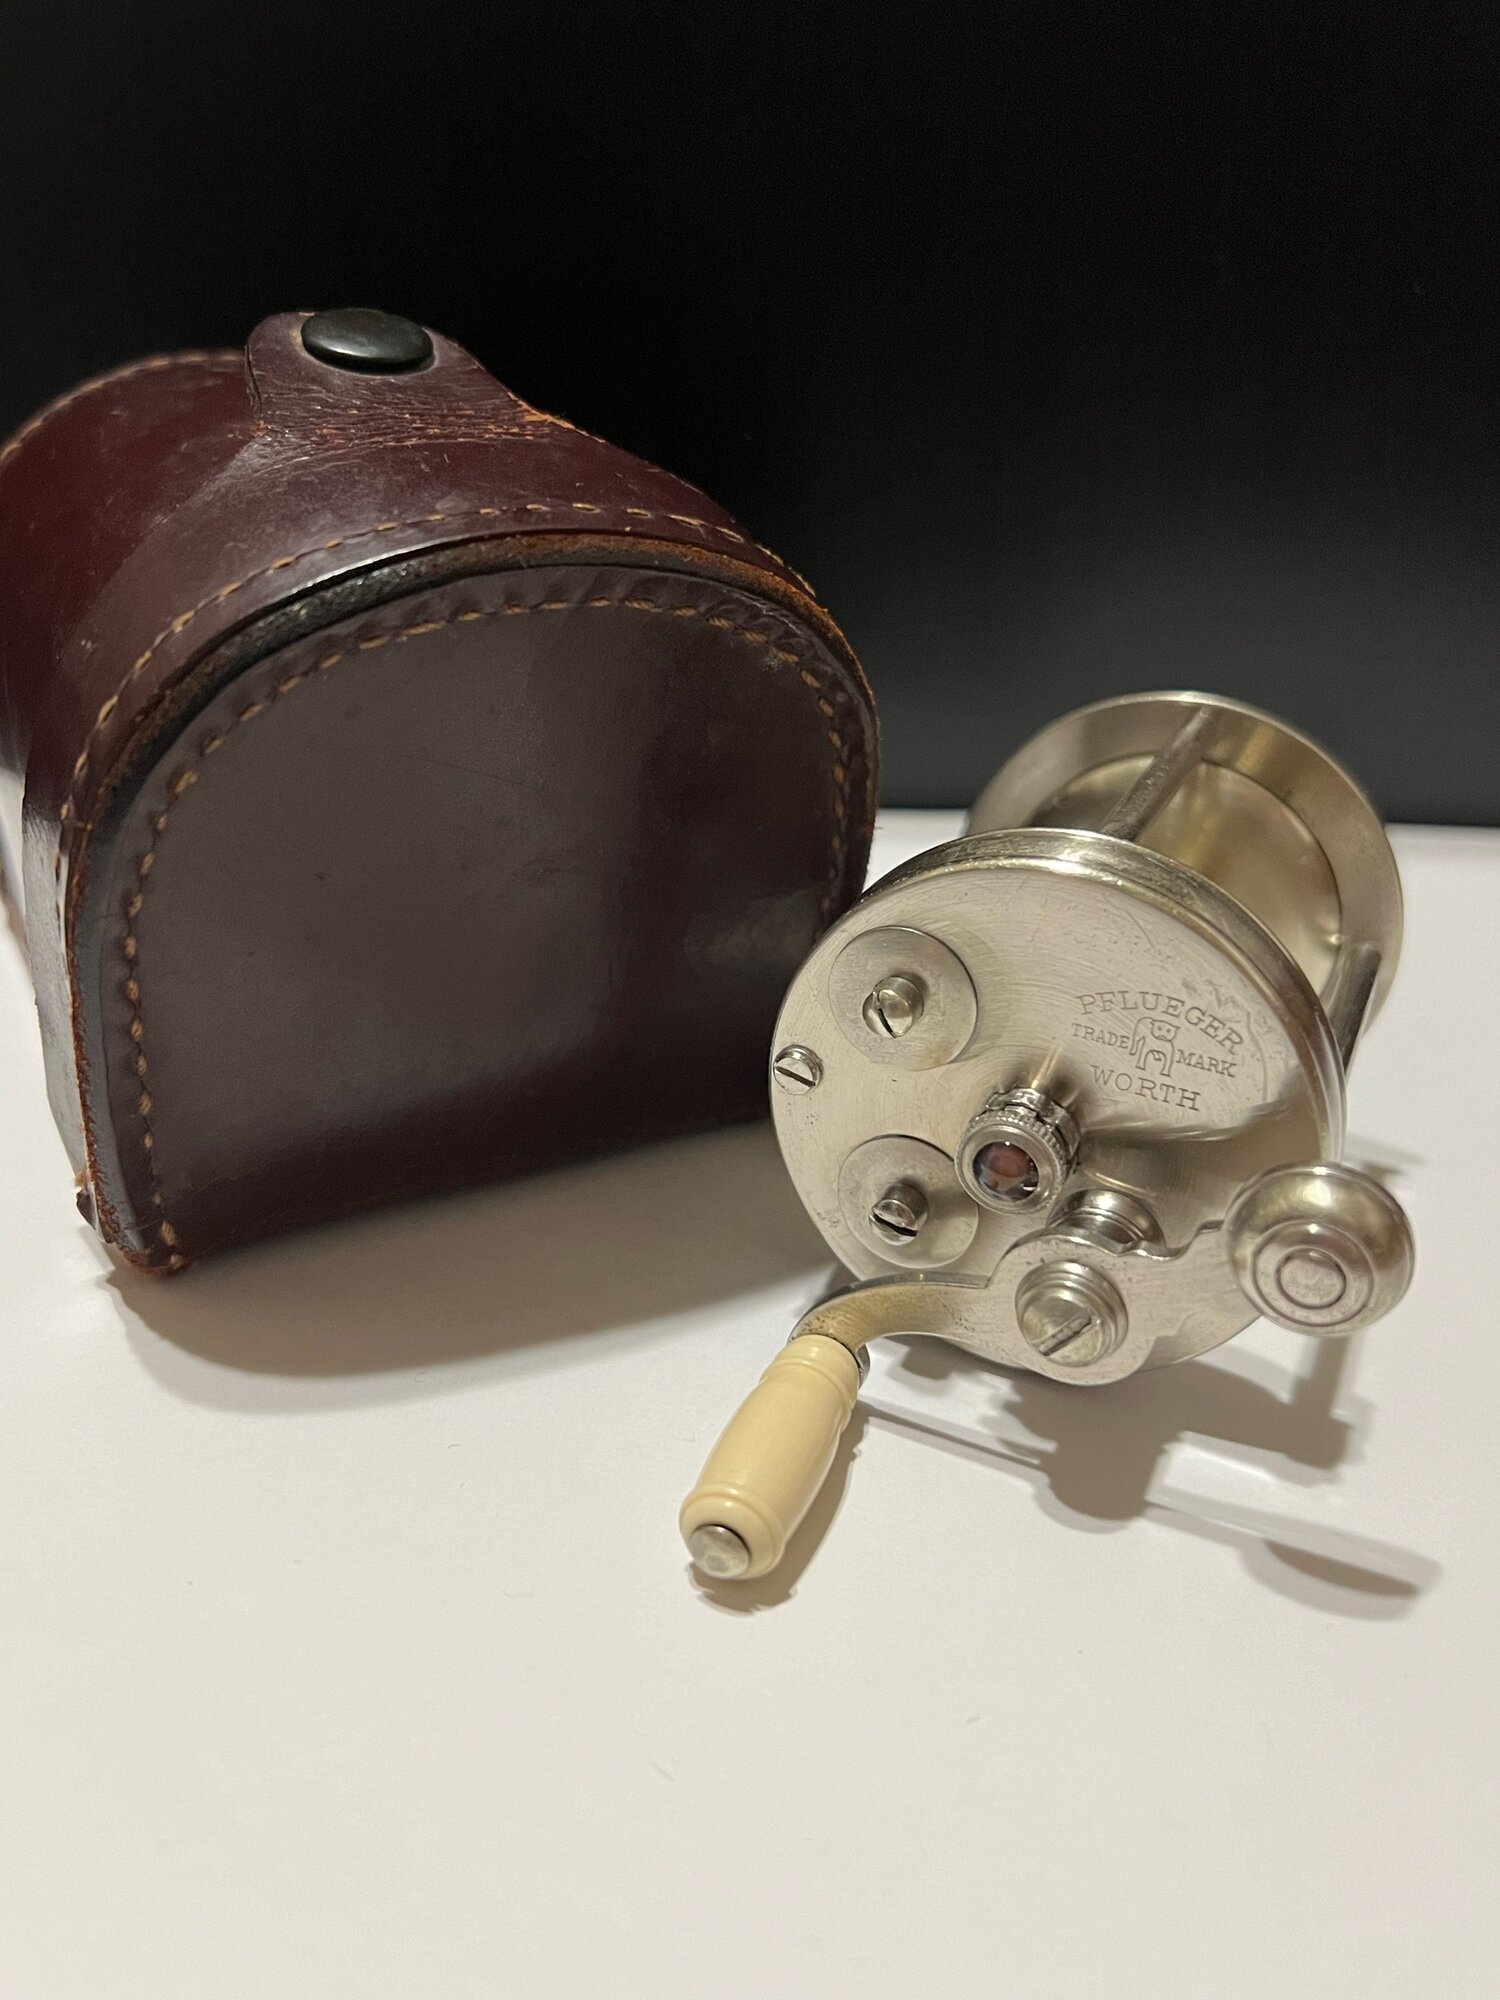 Pflueger WORTH Jeweled with Leather Case Circa - 1915